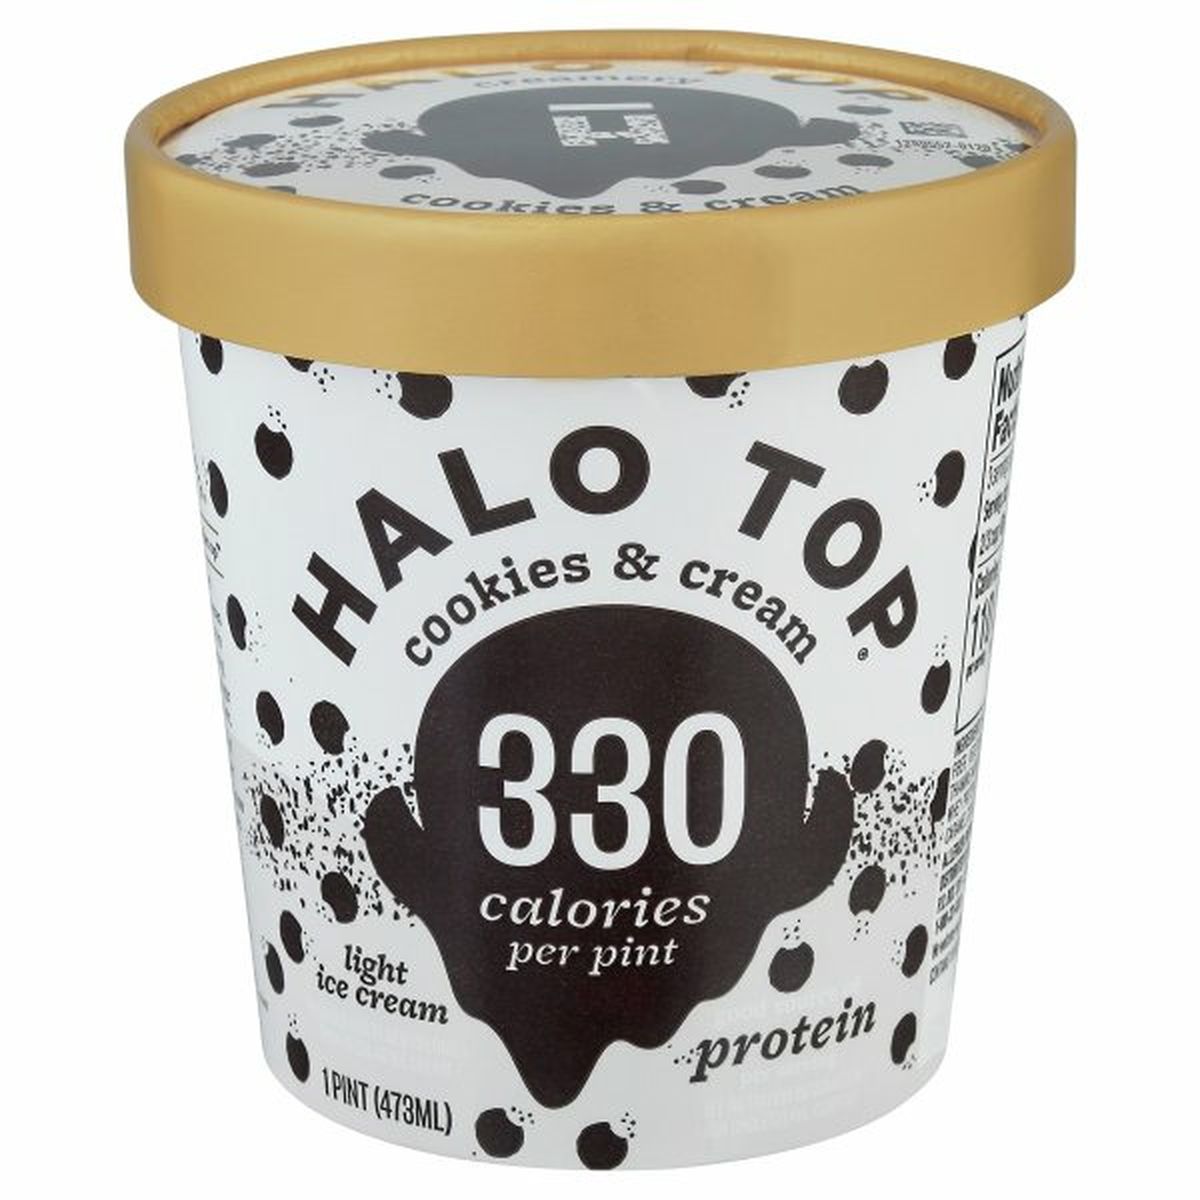 Calories in Halo Top Ice Cream, Light, Cookies & Cream